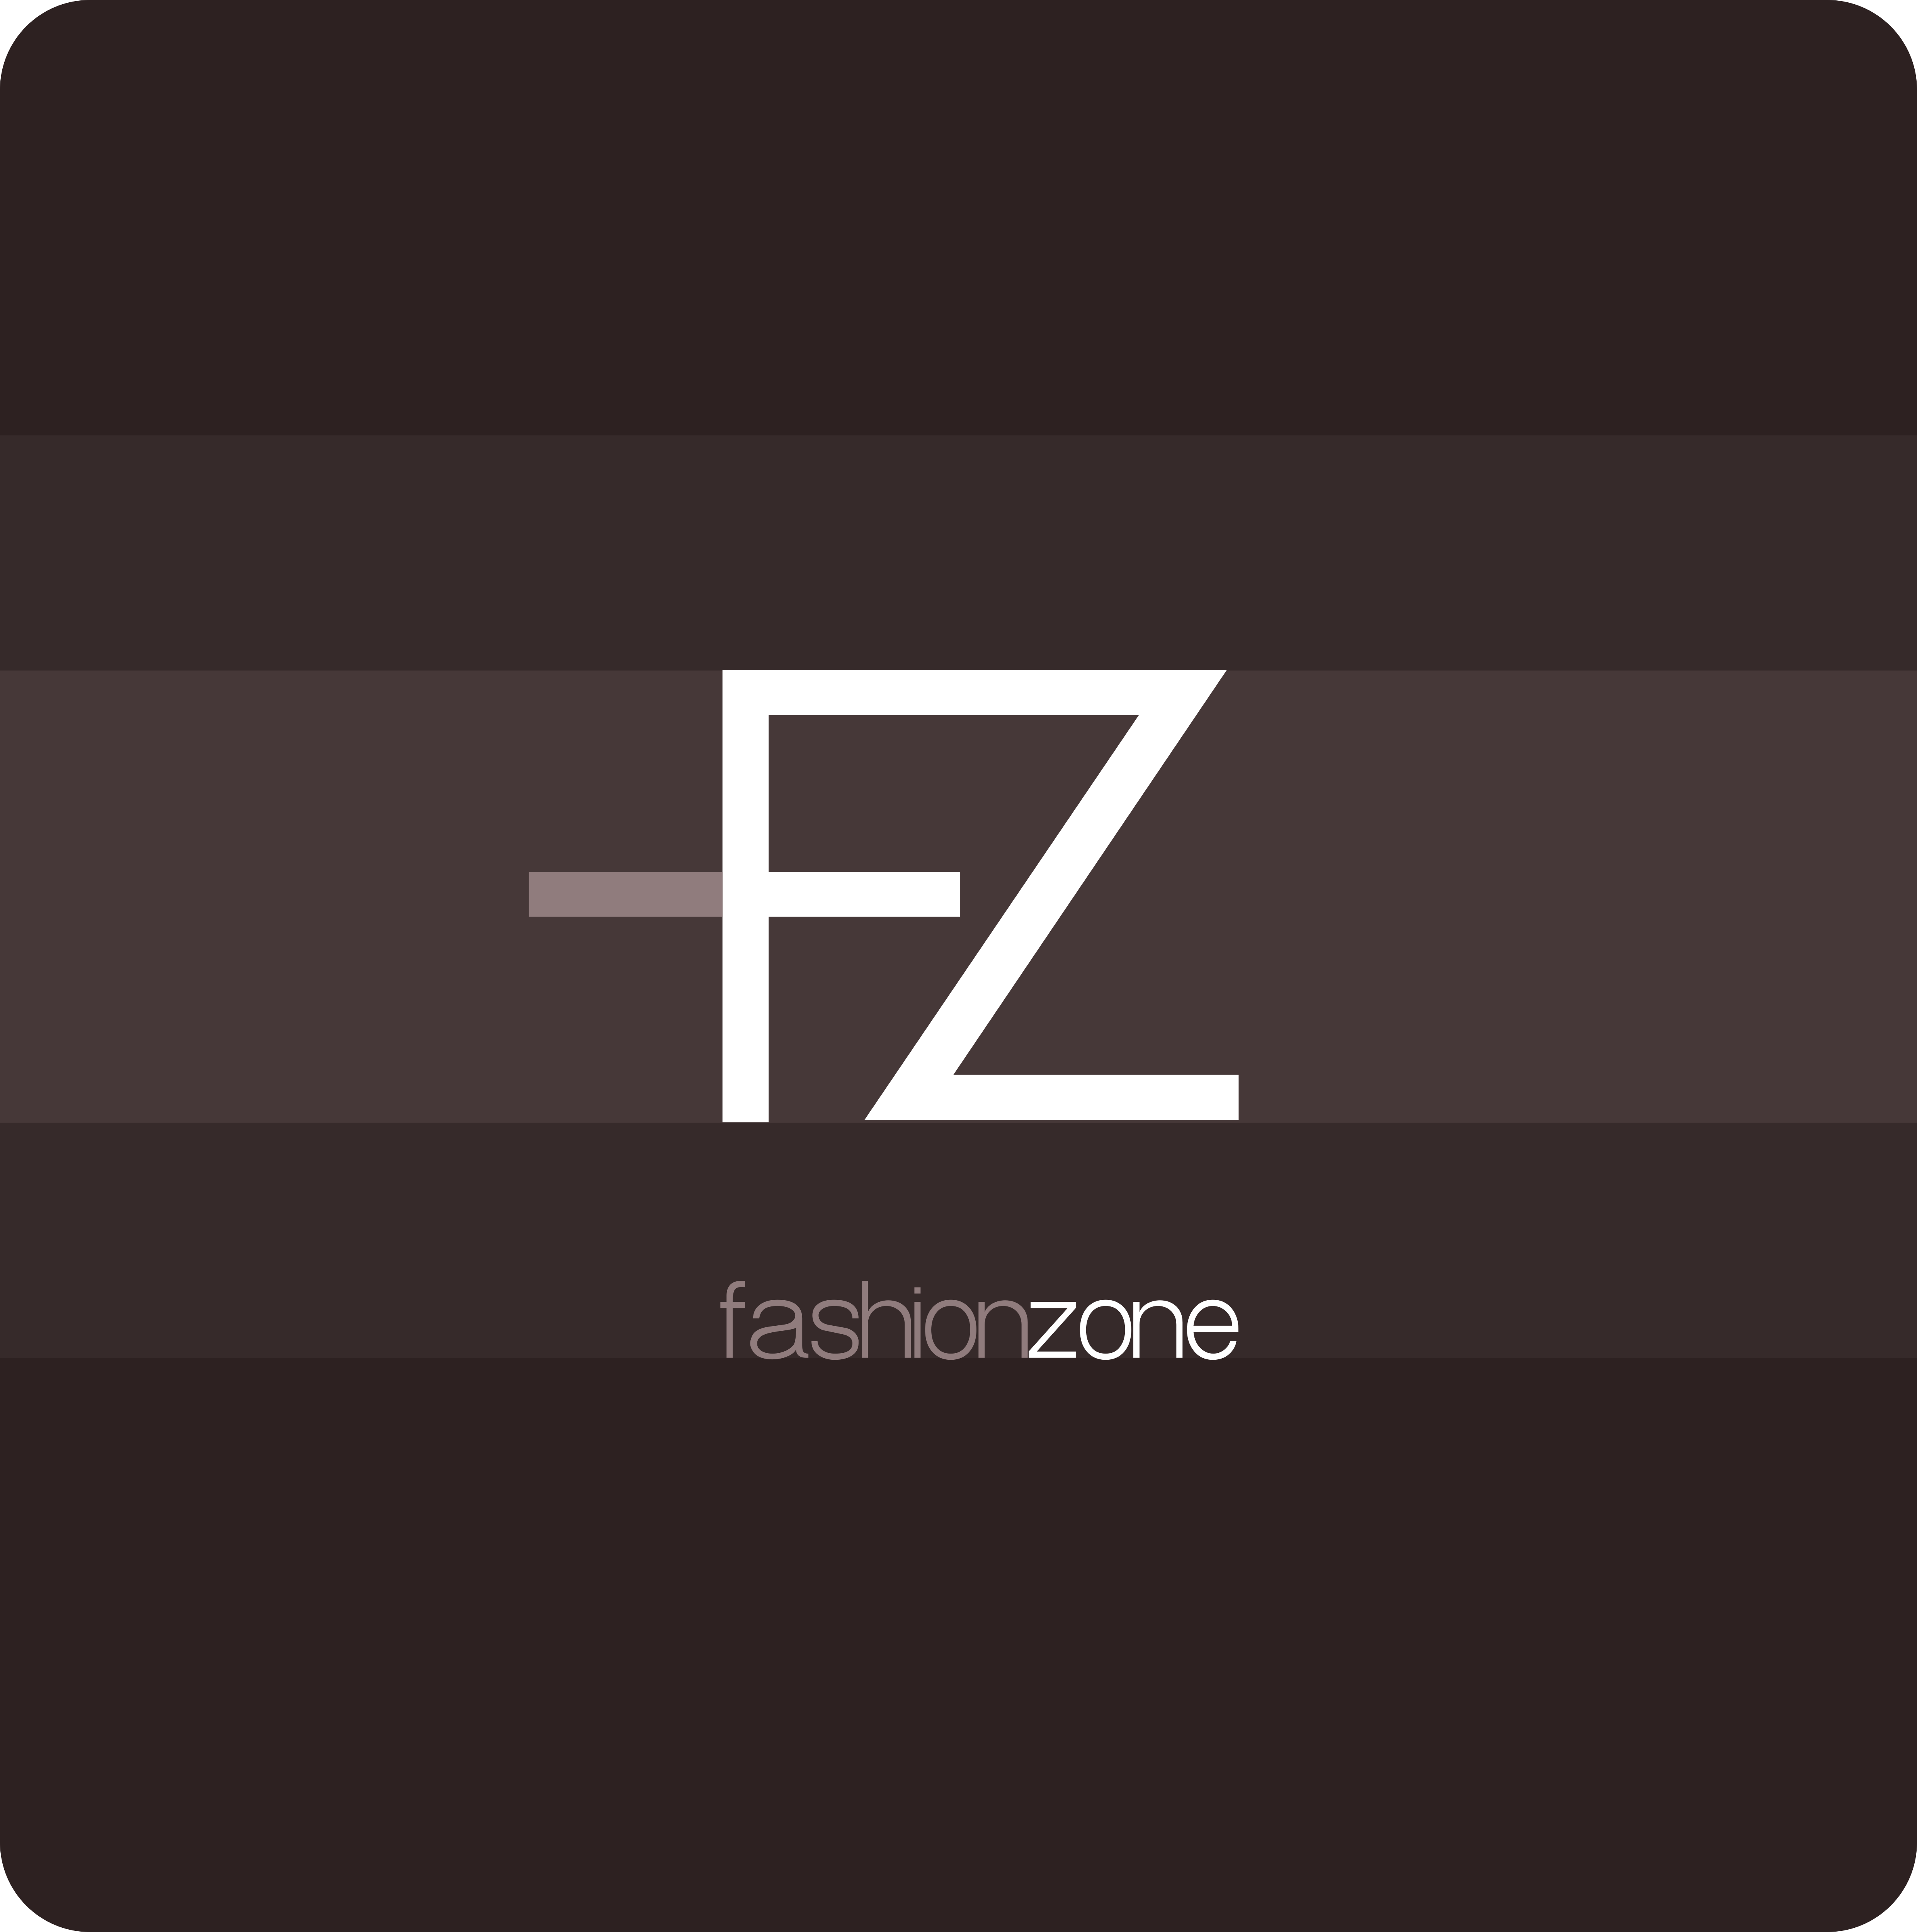 Fashion Zone Logos Download